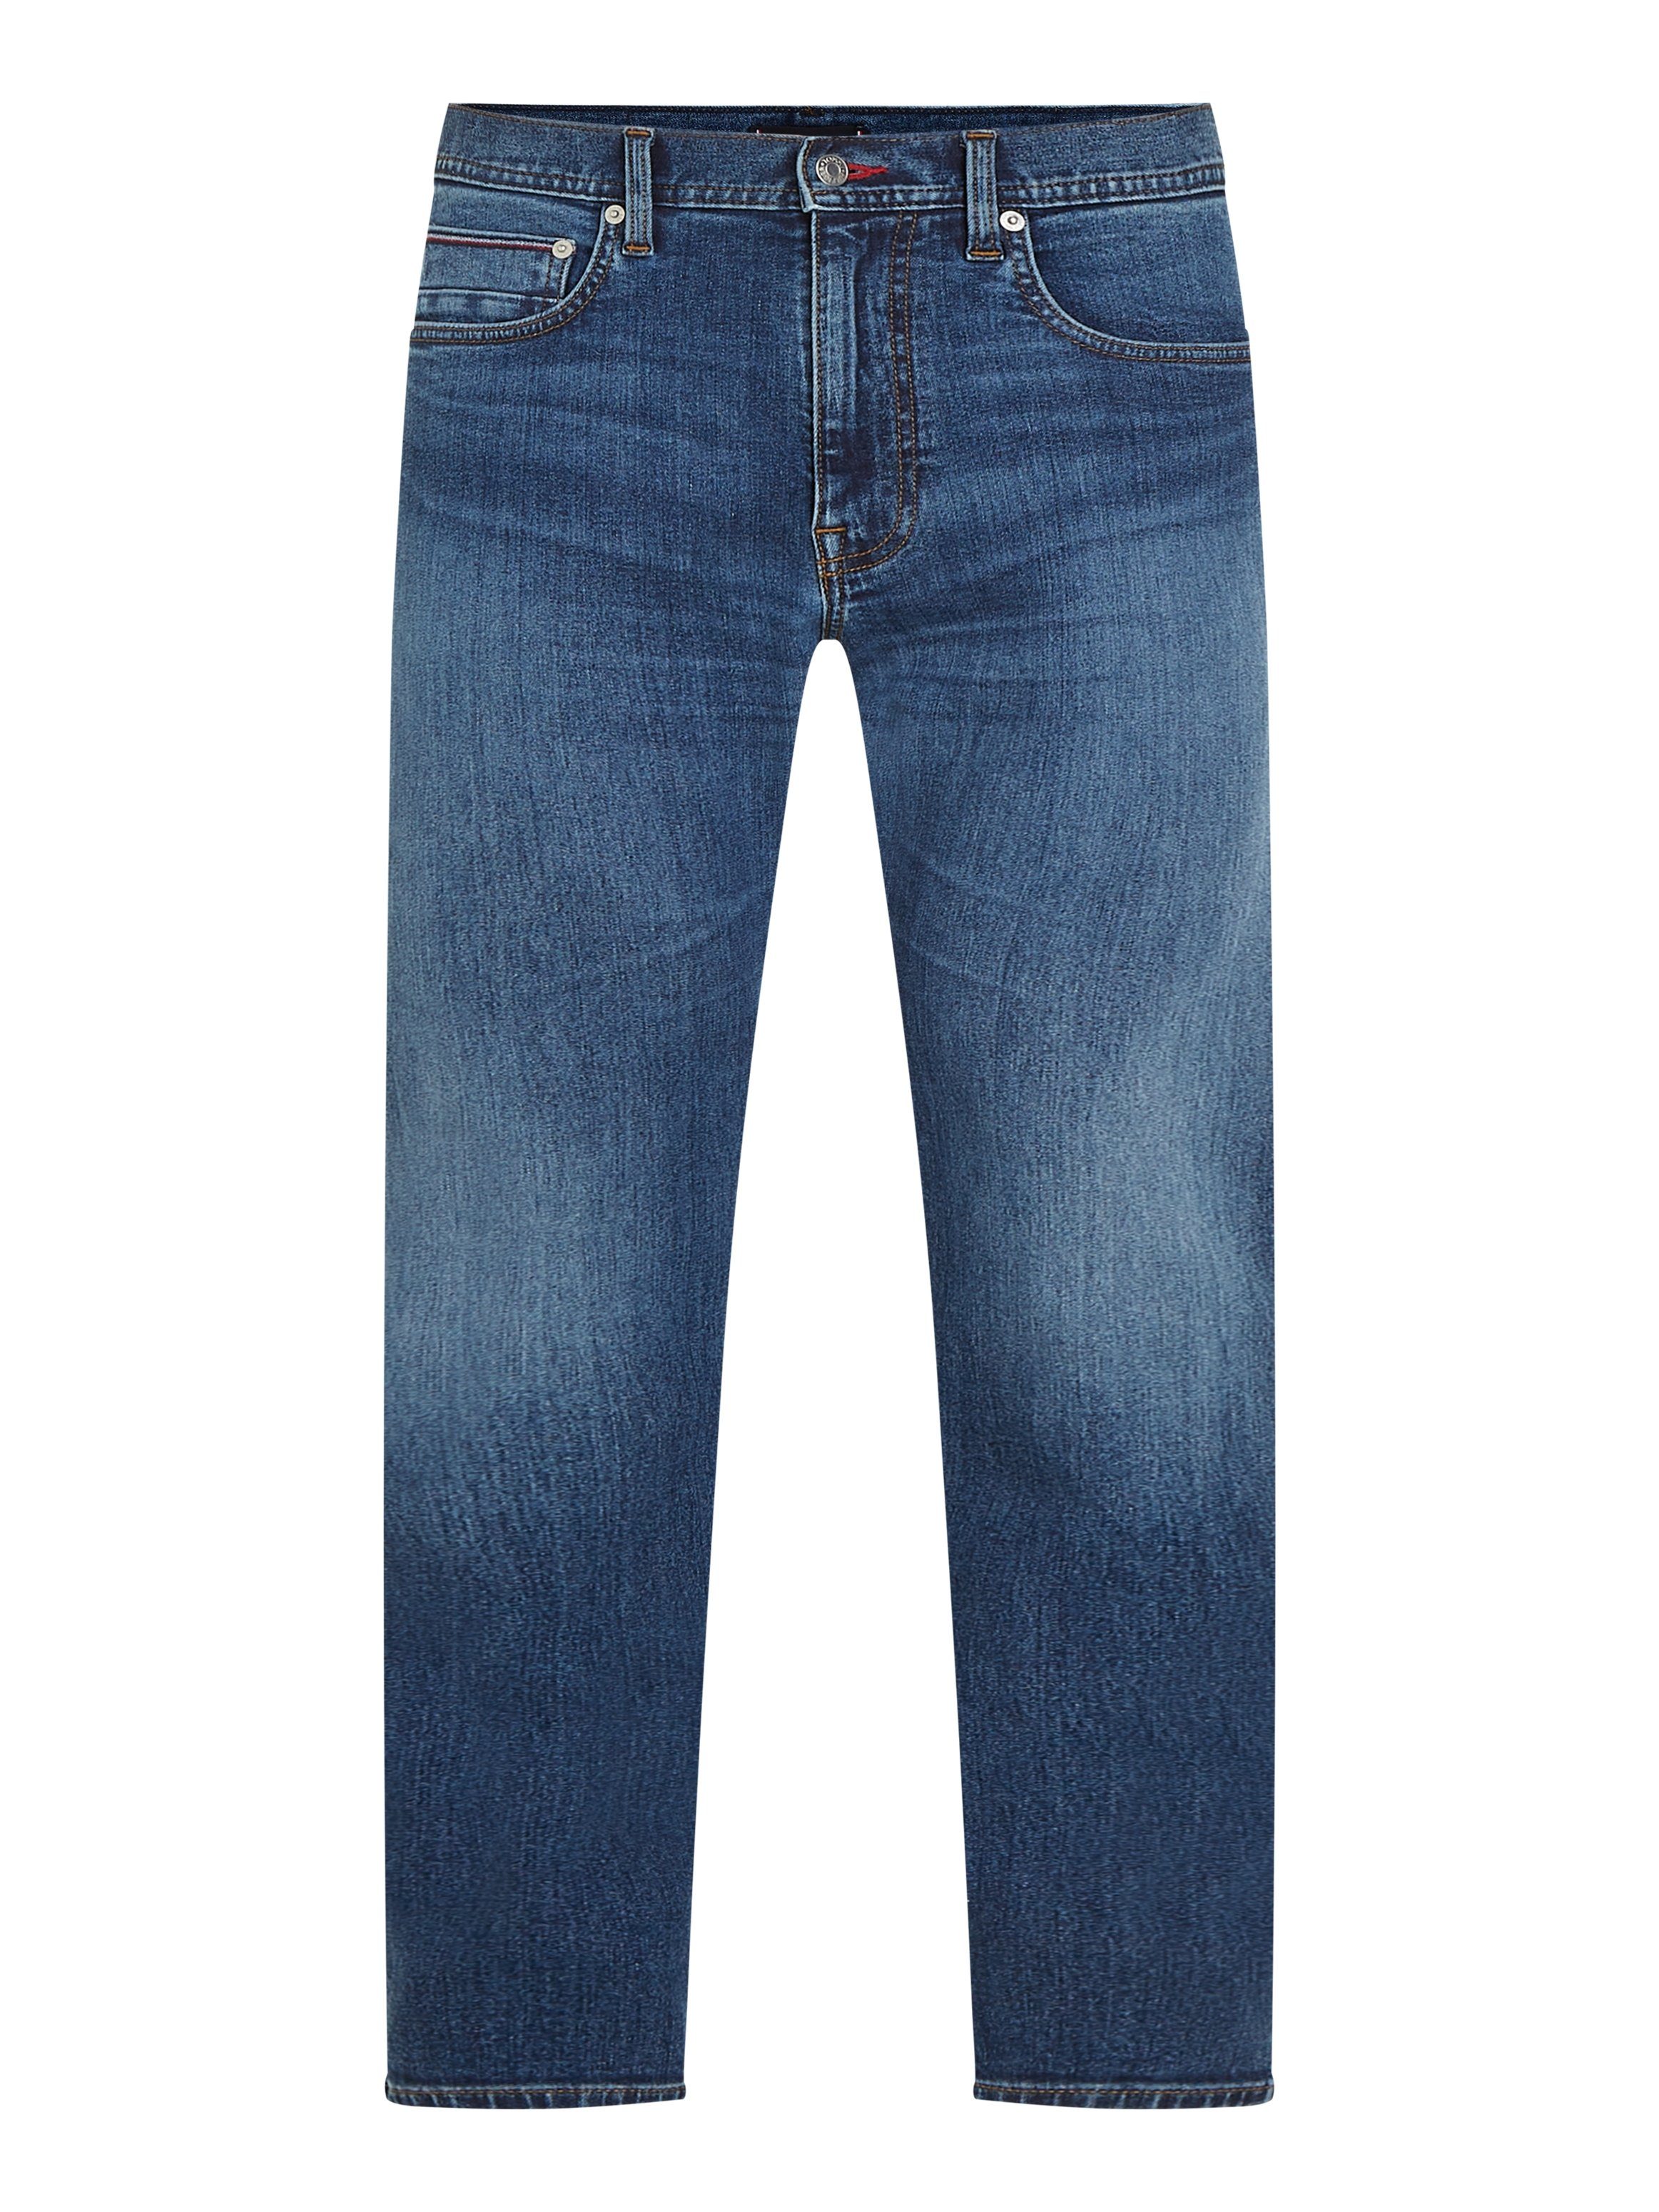 Tommy Hilfiger 5-pocket jeans TAPERED HOUSTON TH FLEX TUMON